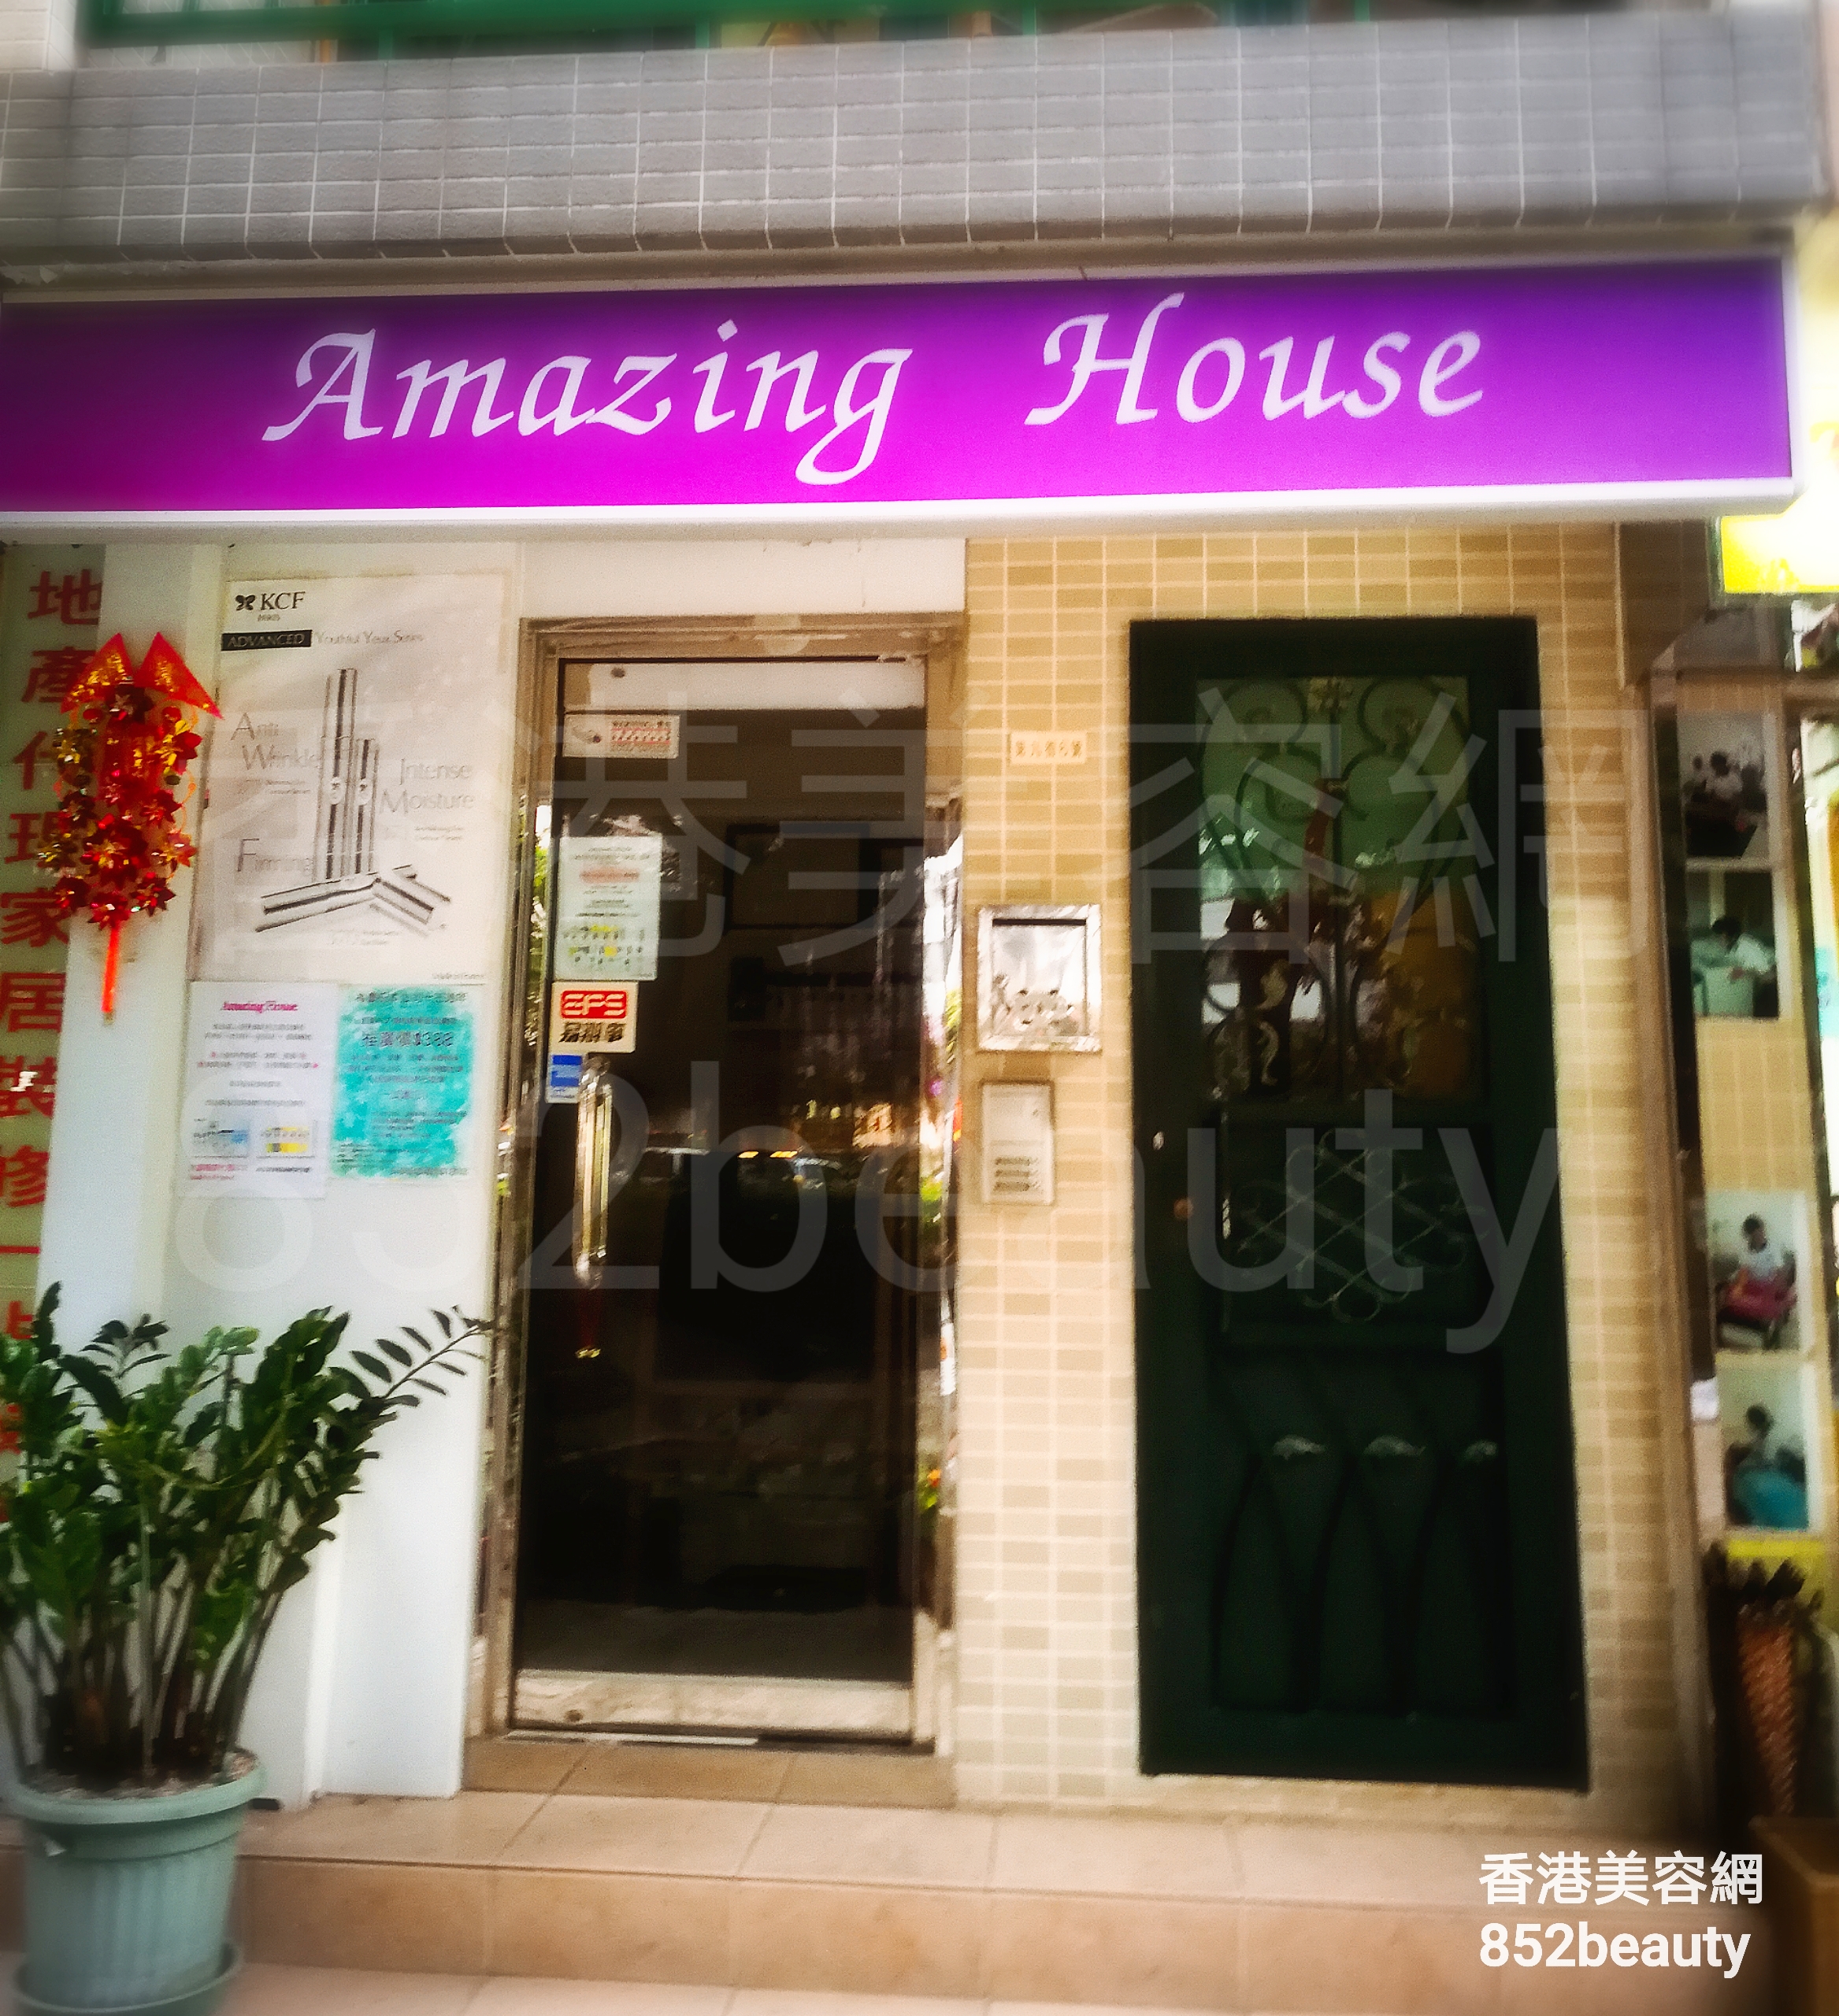 香港美容網 Hong Kong Beauty Salon 美容院 / 美容師: Amazing House